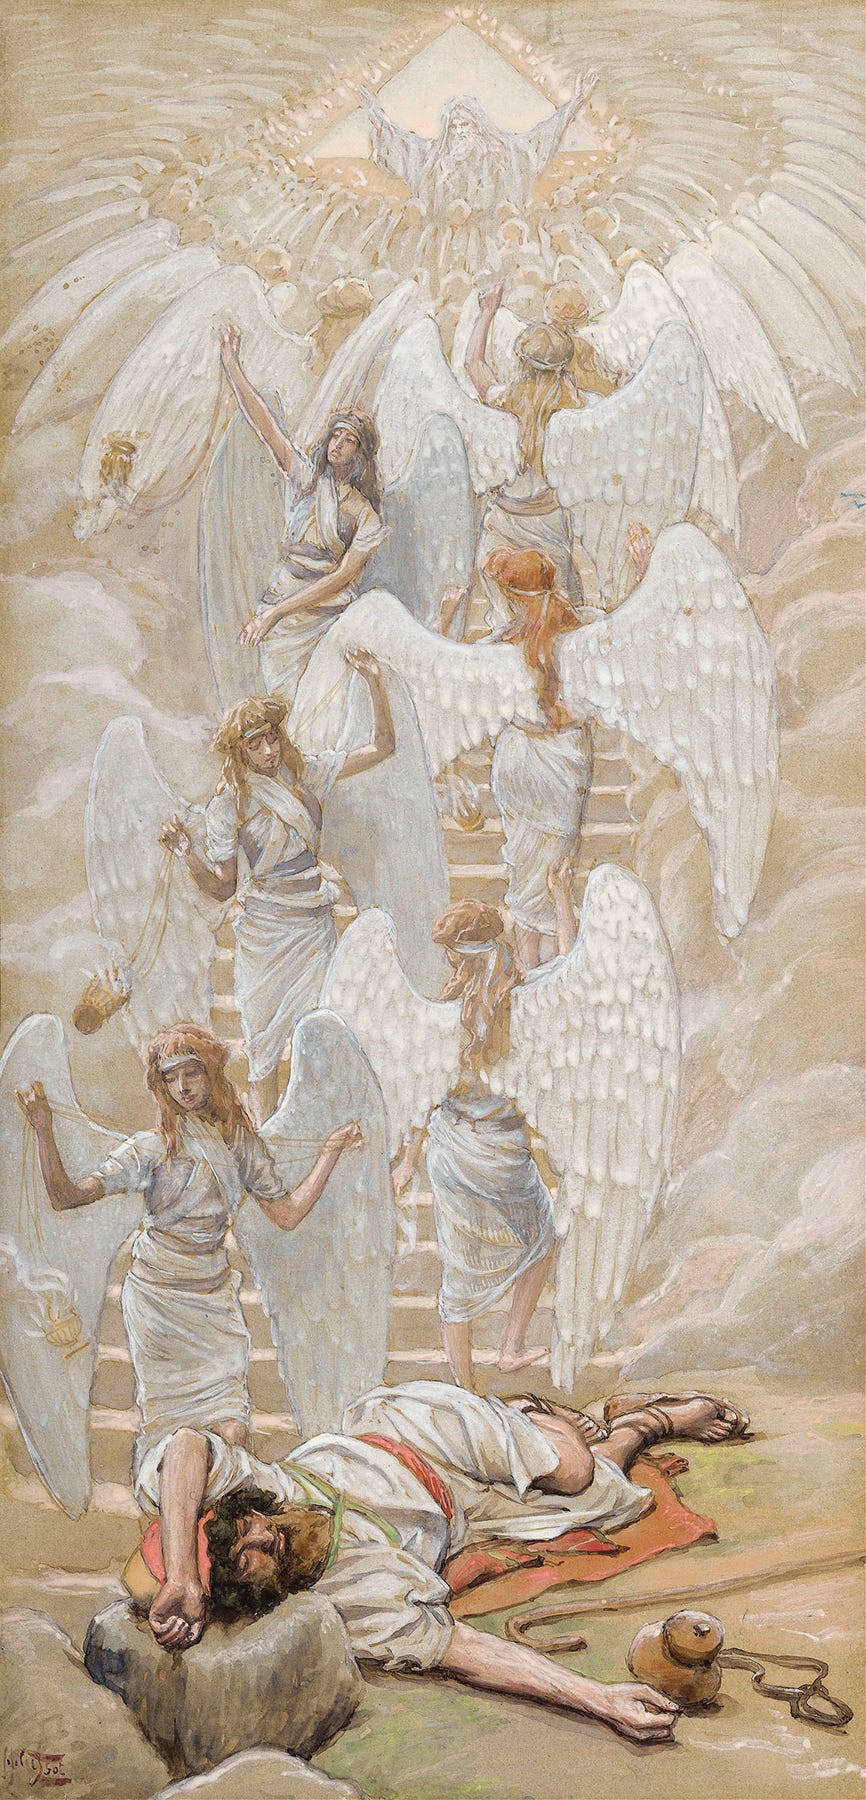 Jacob’s Dream (c. 1896-1902) by James Tissot